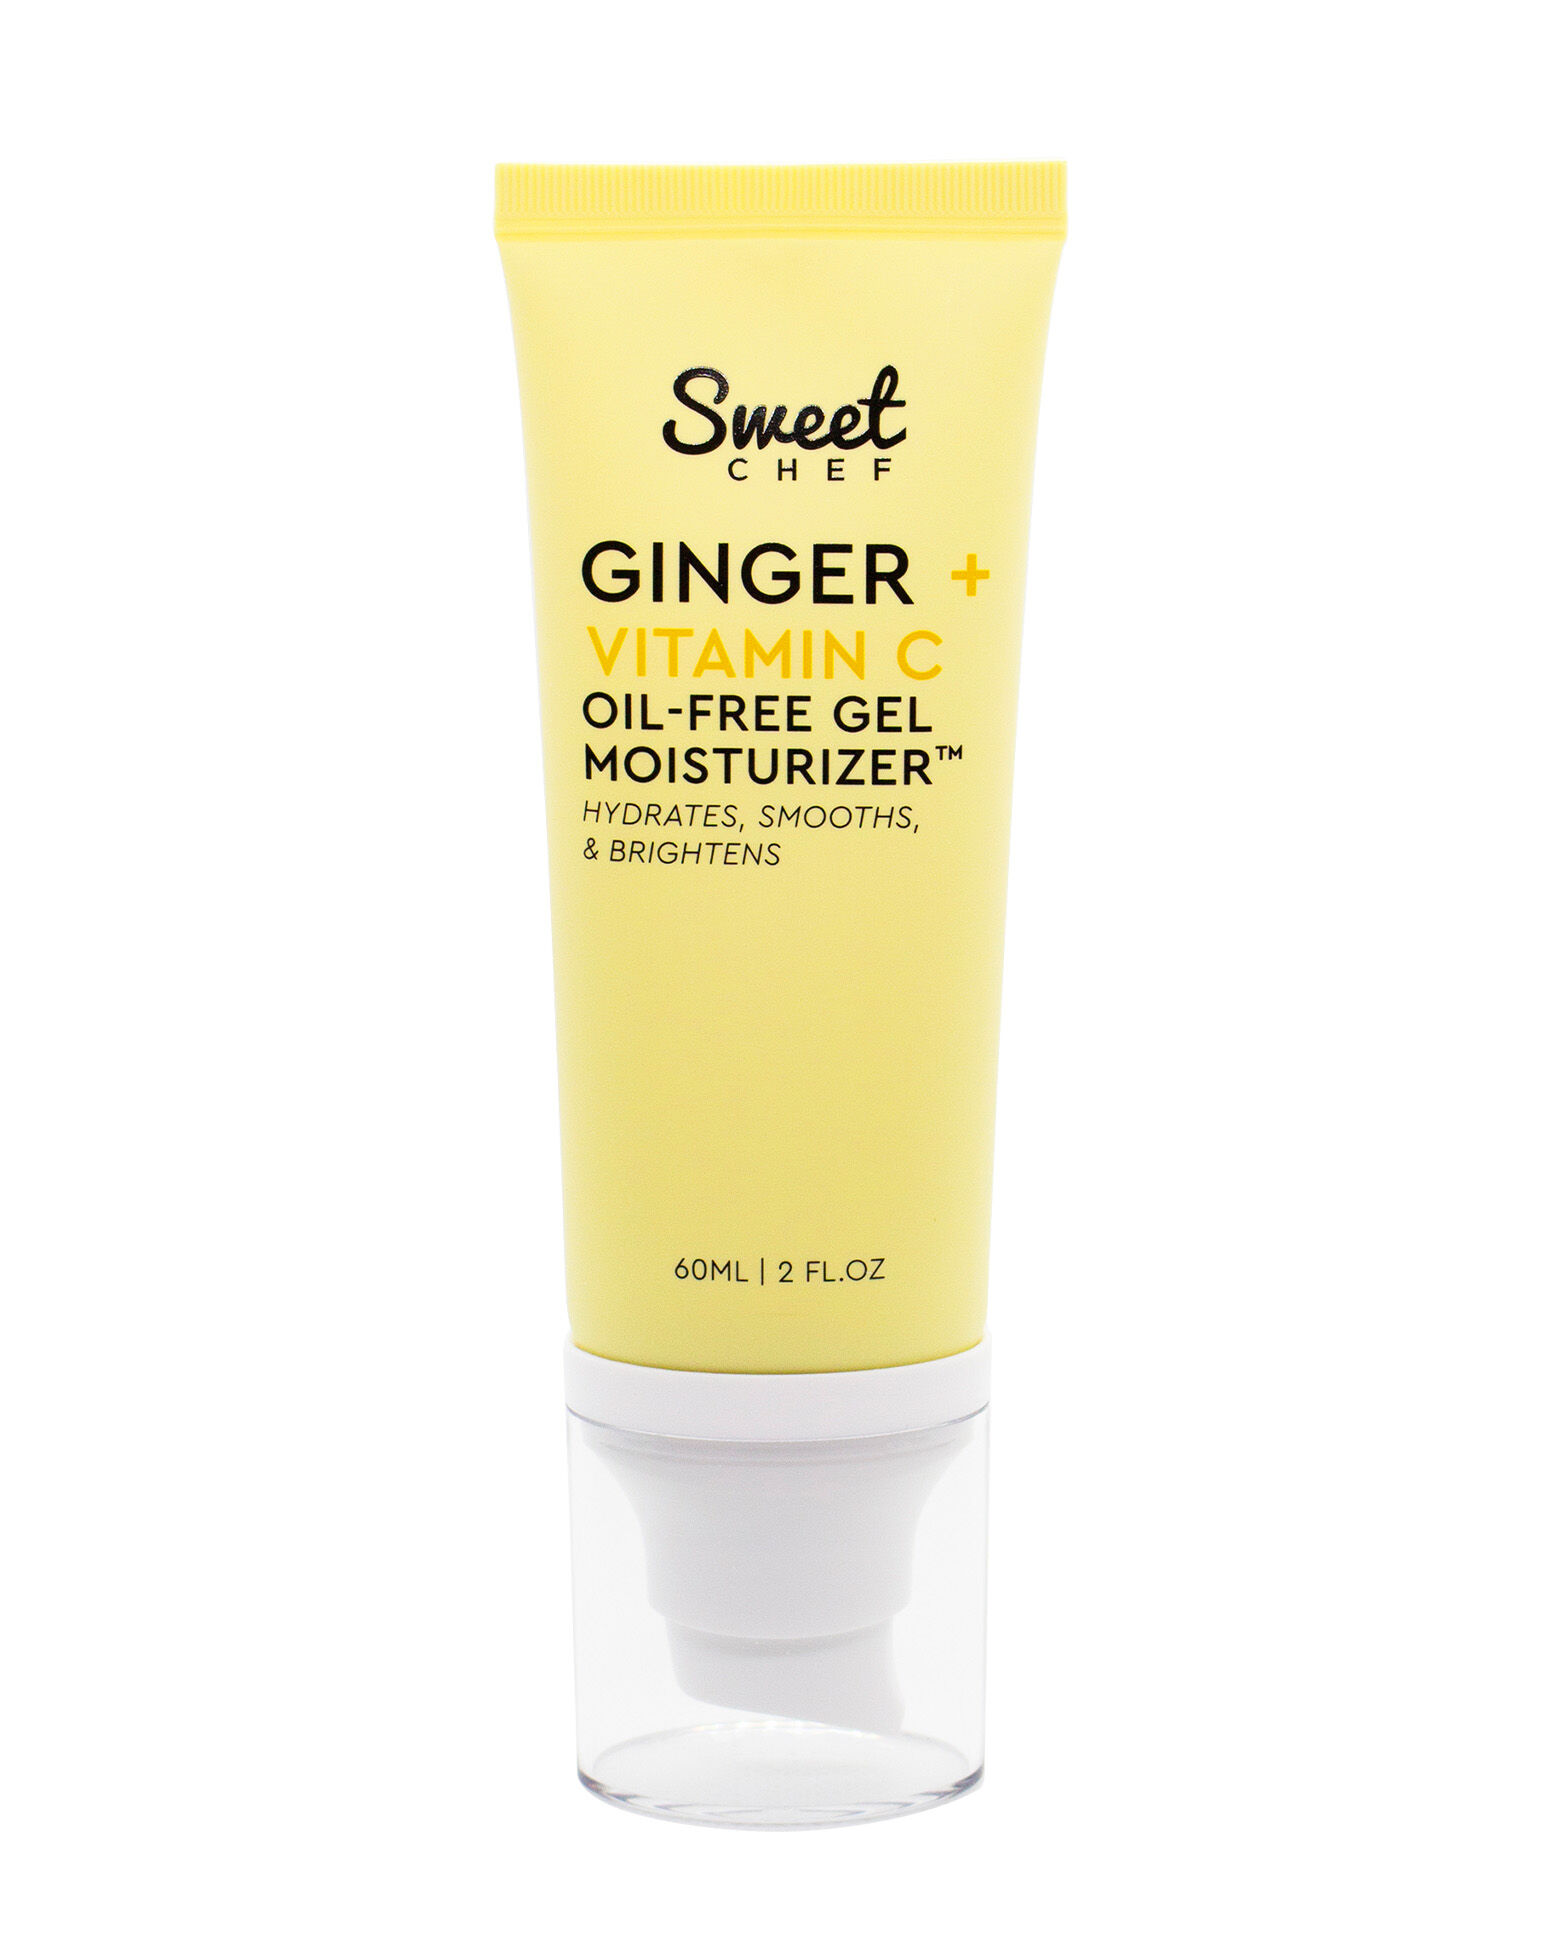 Sweet Chef - Ginger + Vitamin C Oil-Free Gel Moisturizer